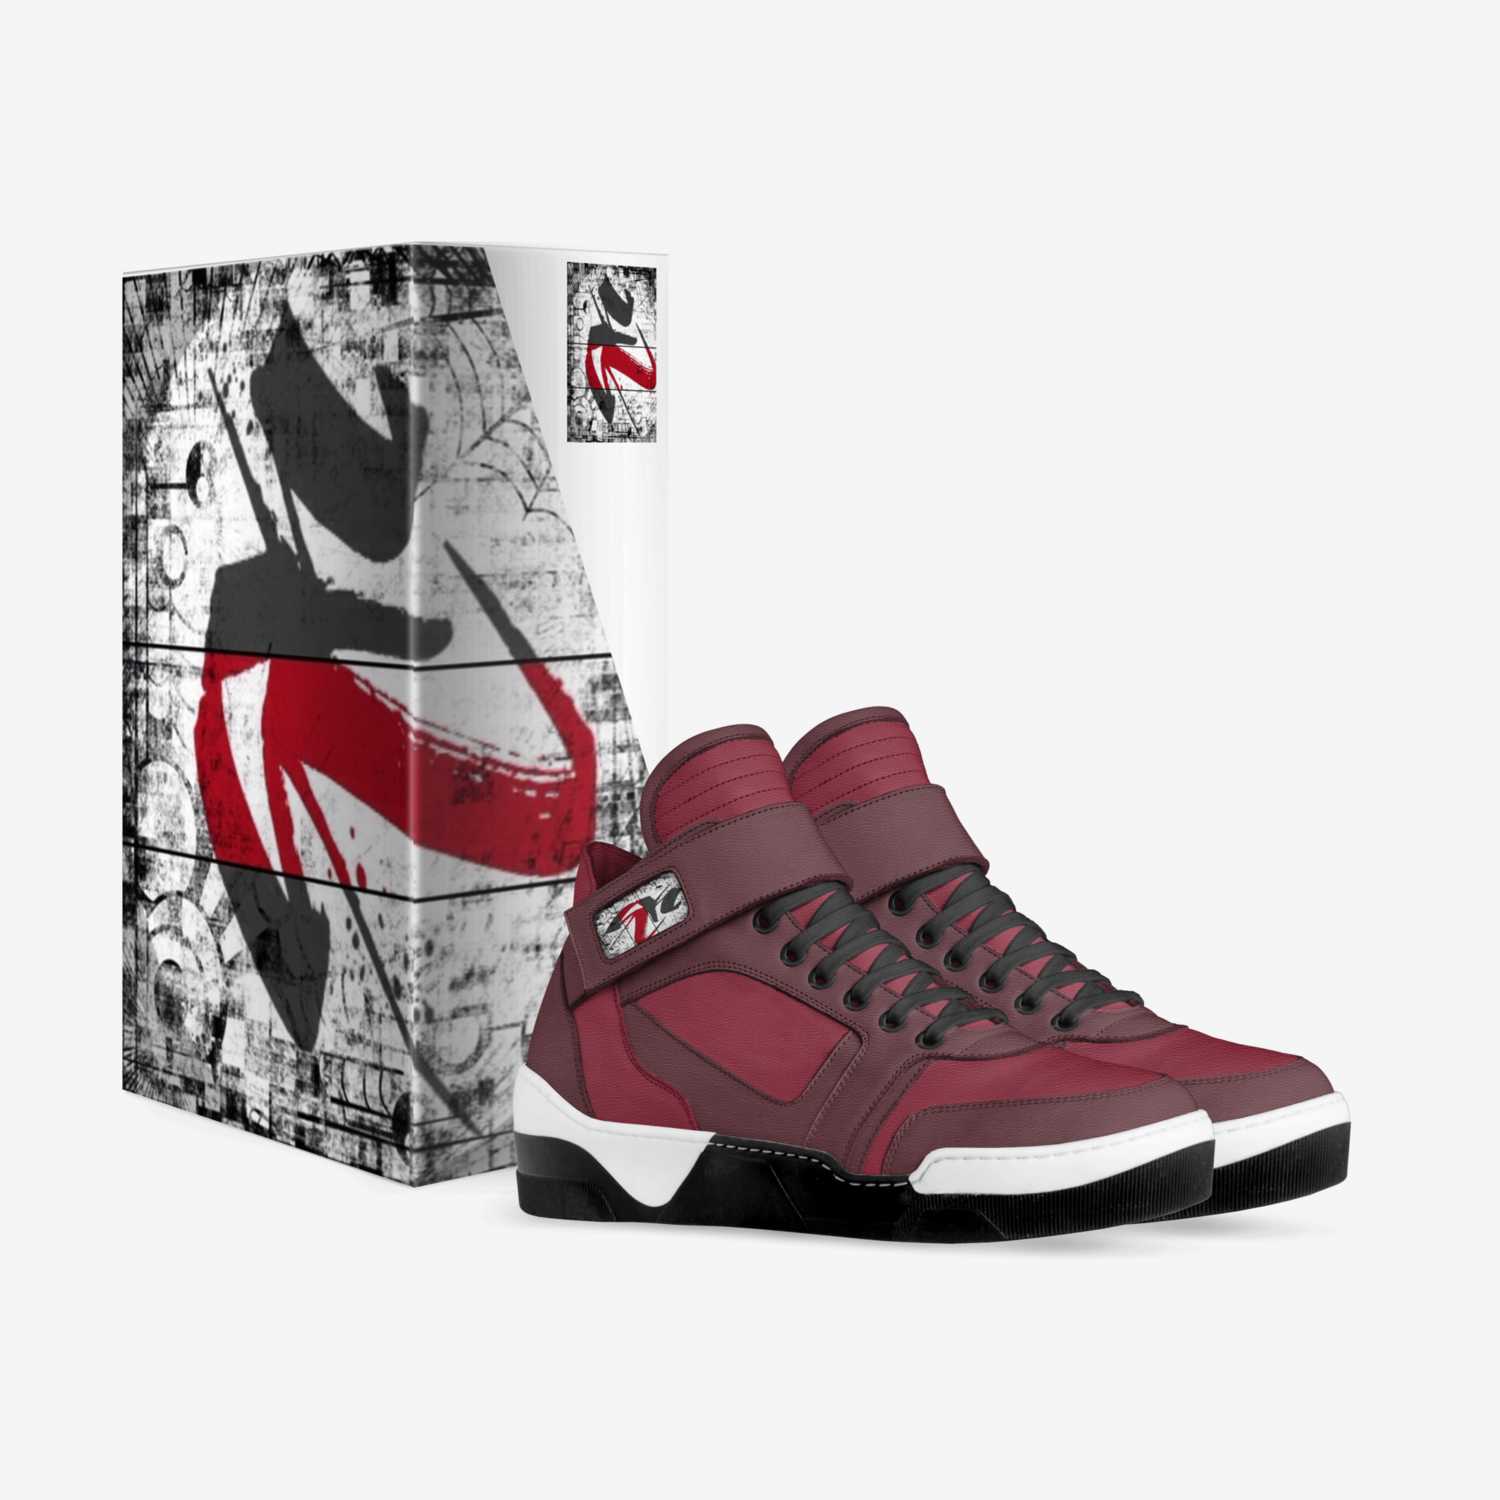 TH3 SLK's custom made in Italy shoes by Th3 Slk | Box view